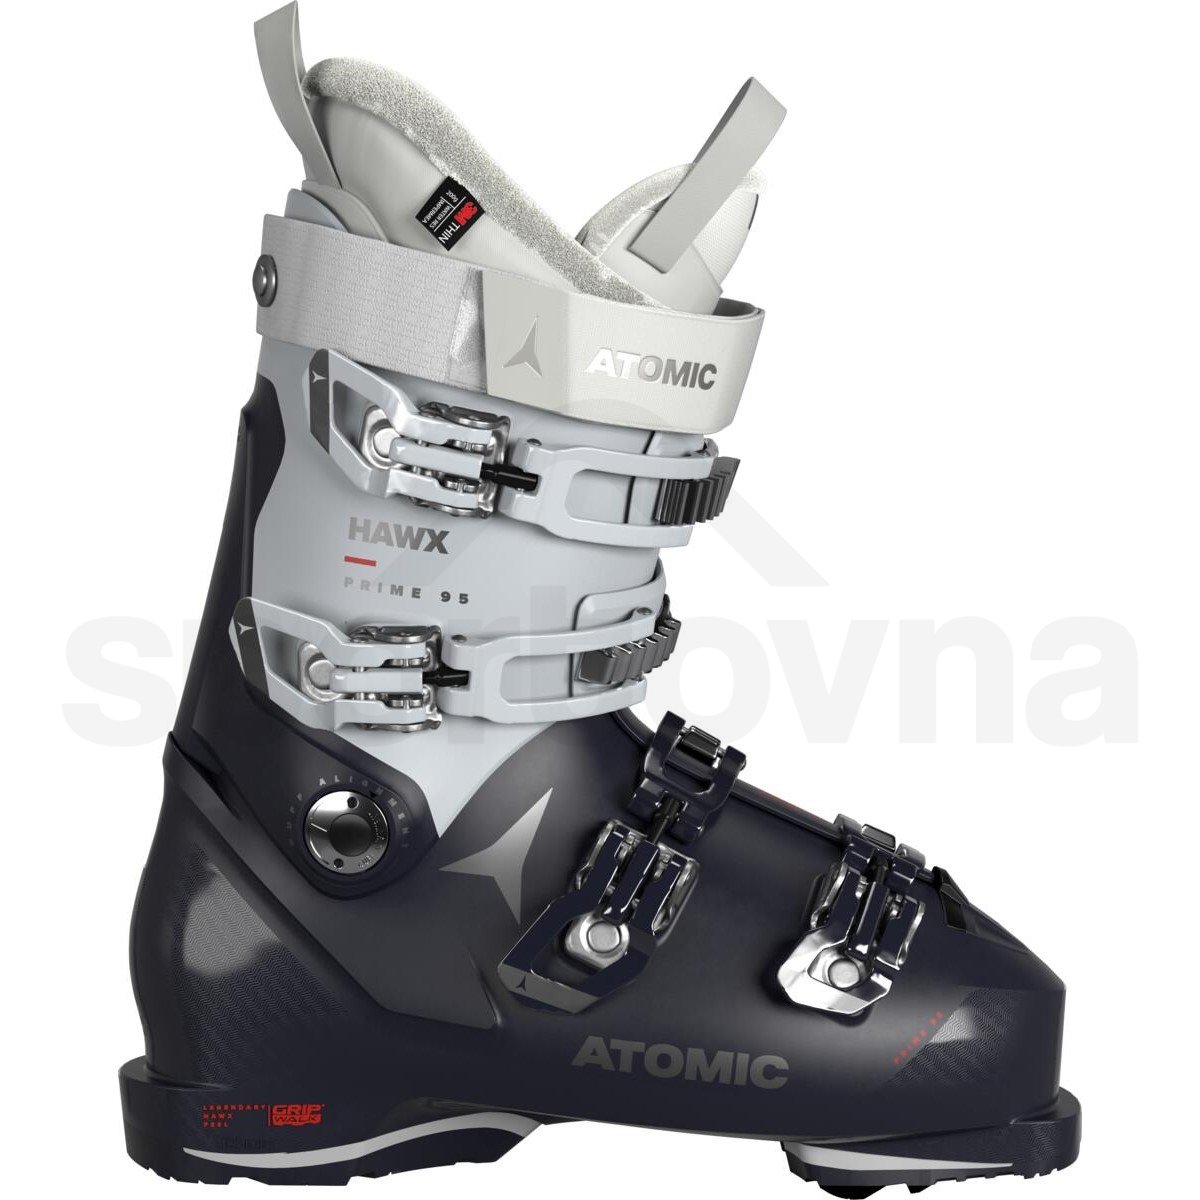 Lyžařské boty Atomic Hawx Prime 95 W GW W - šedá/bílá